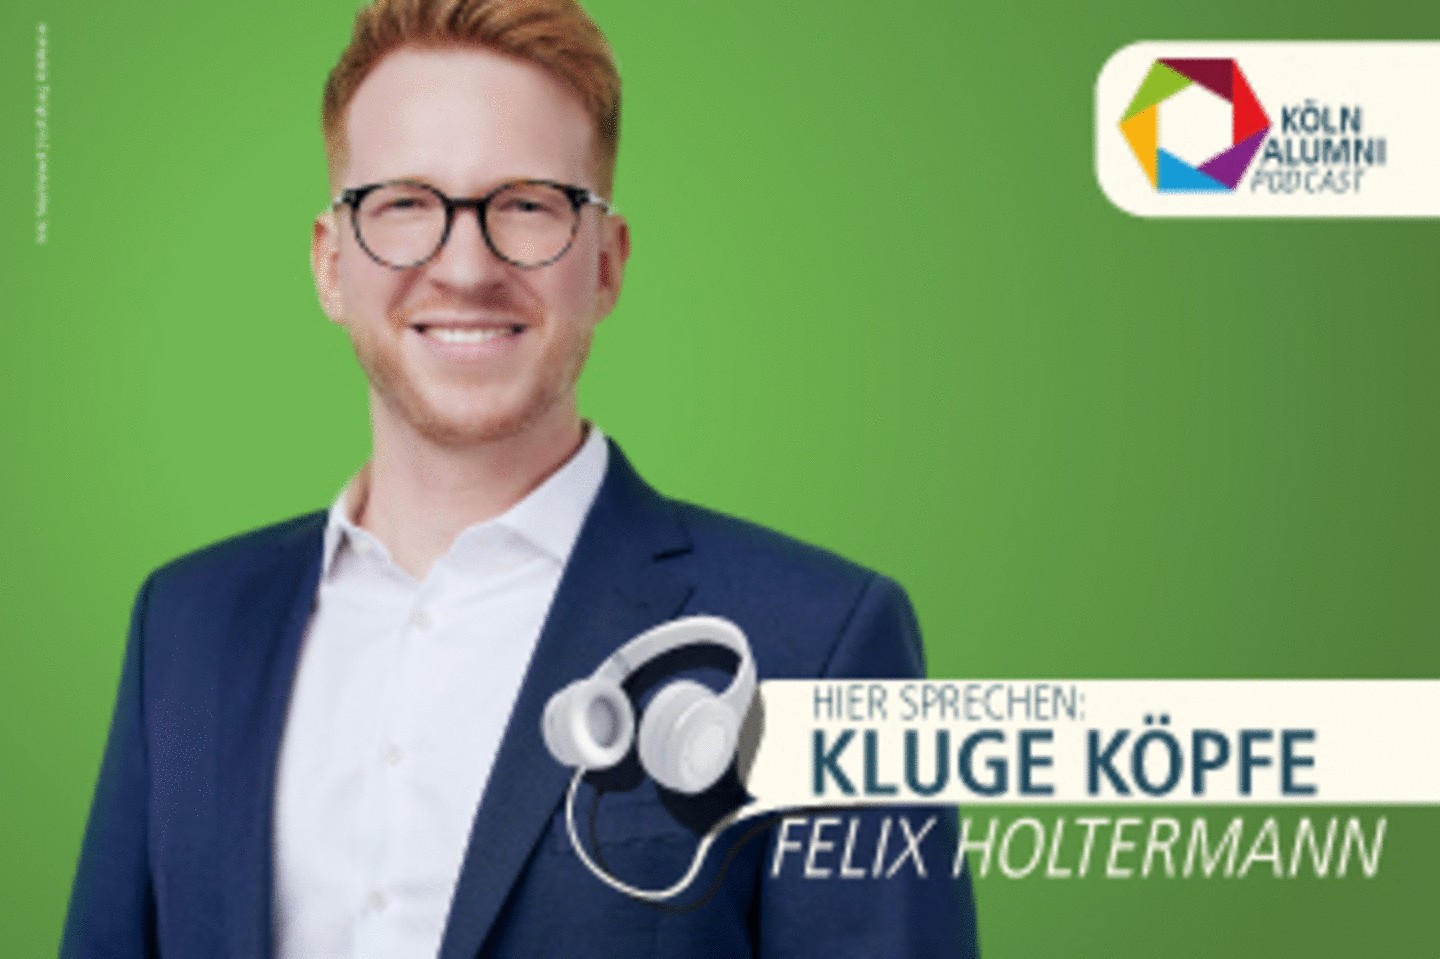 KölnAlumni-Podcast "Hier sprechen: Kluge Köpfe"